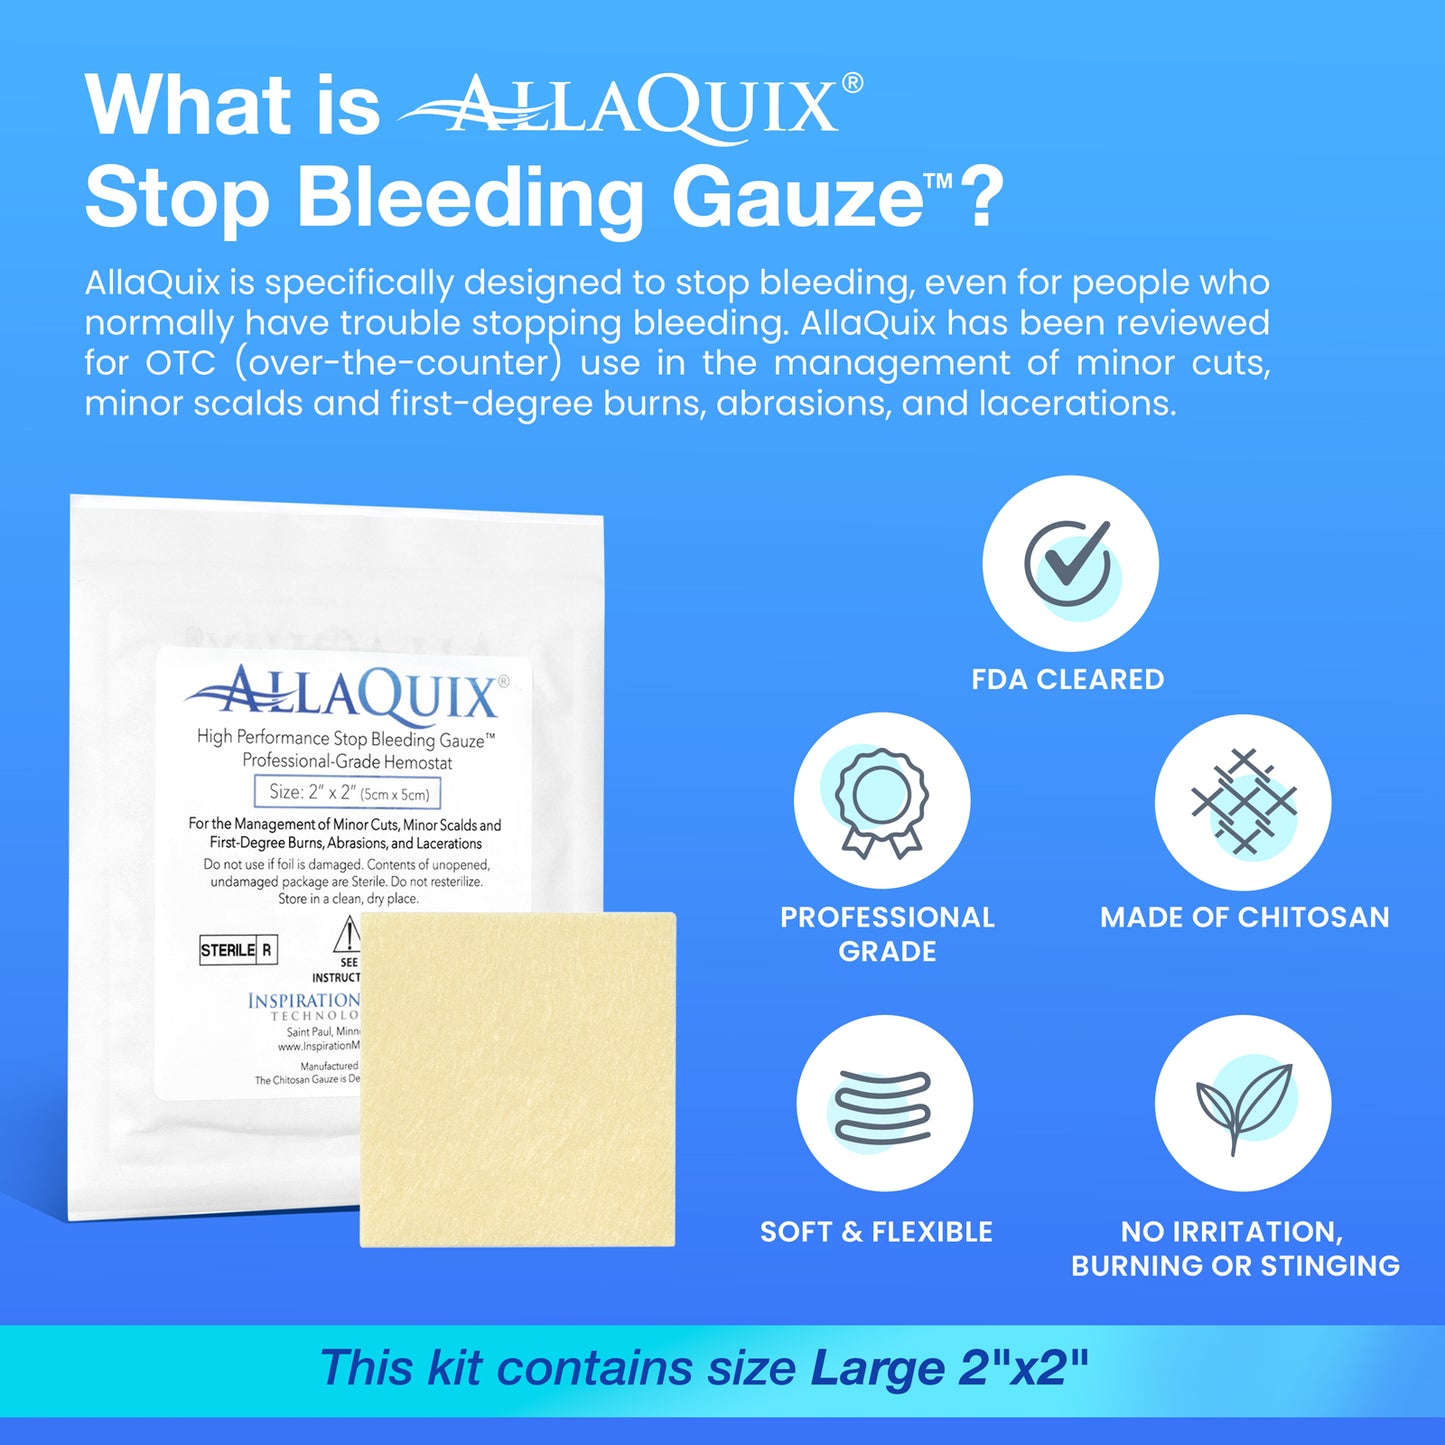 TRIAL - AllaQuix High Performance Stop Bleeding Gauze